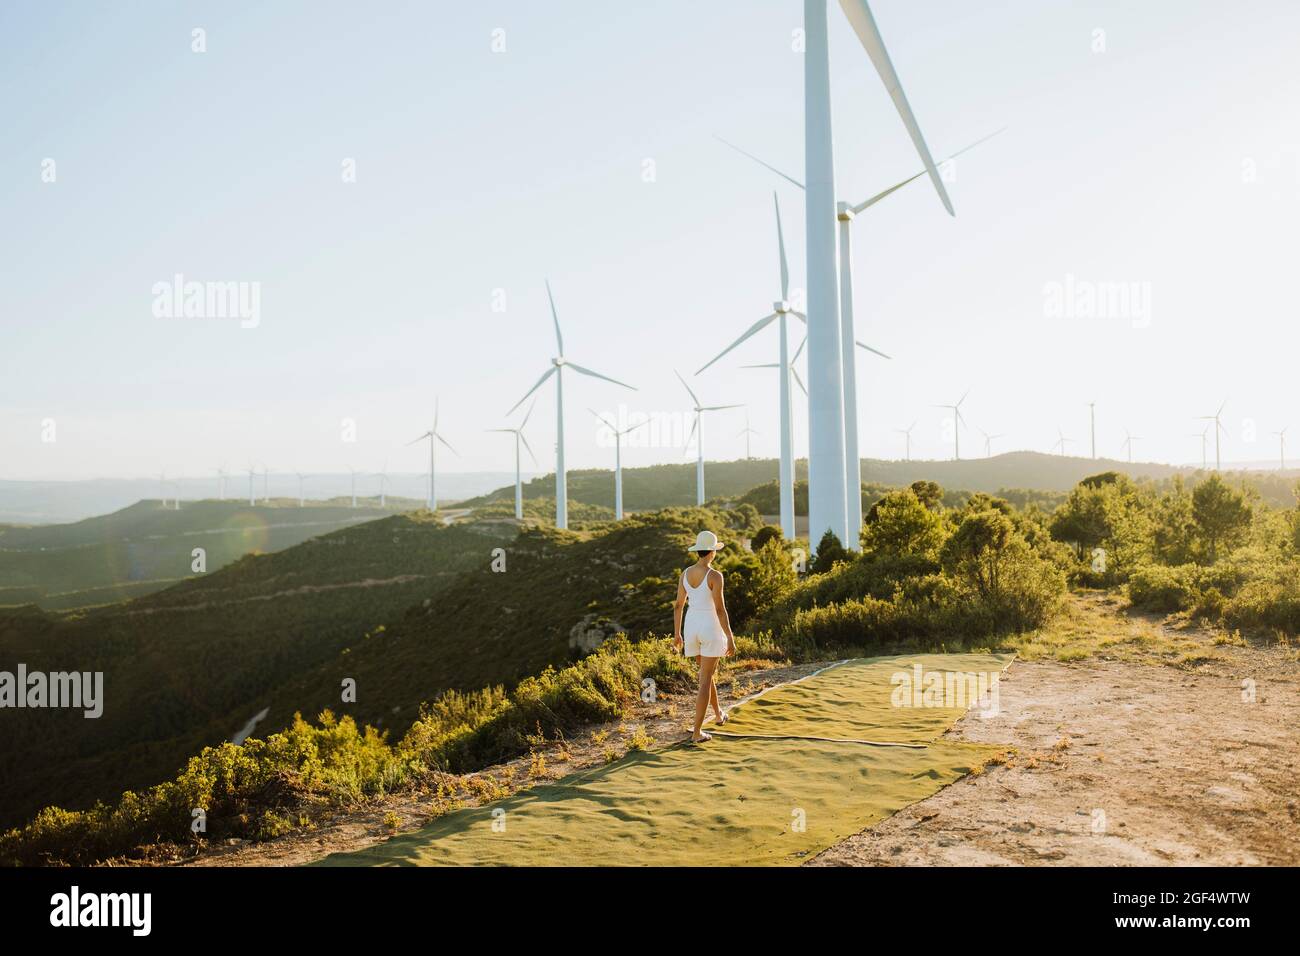 Woman walking on mountain path towards wind turbines during sunset Stock Photo